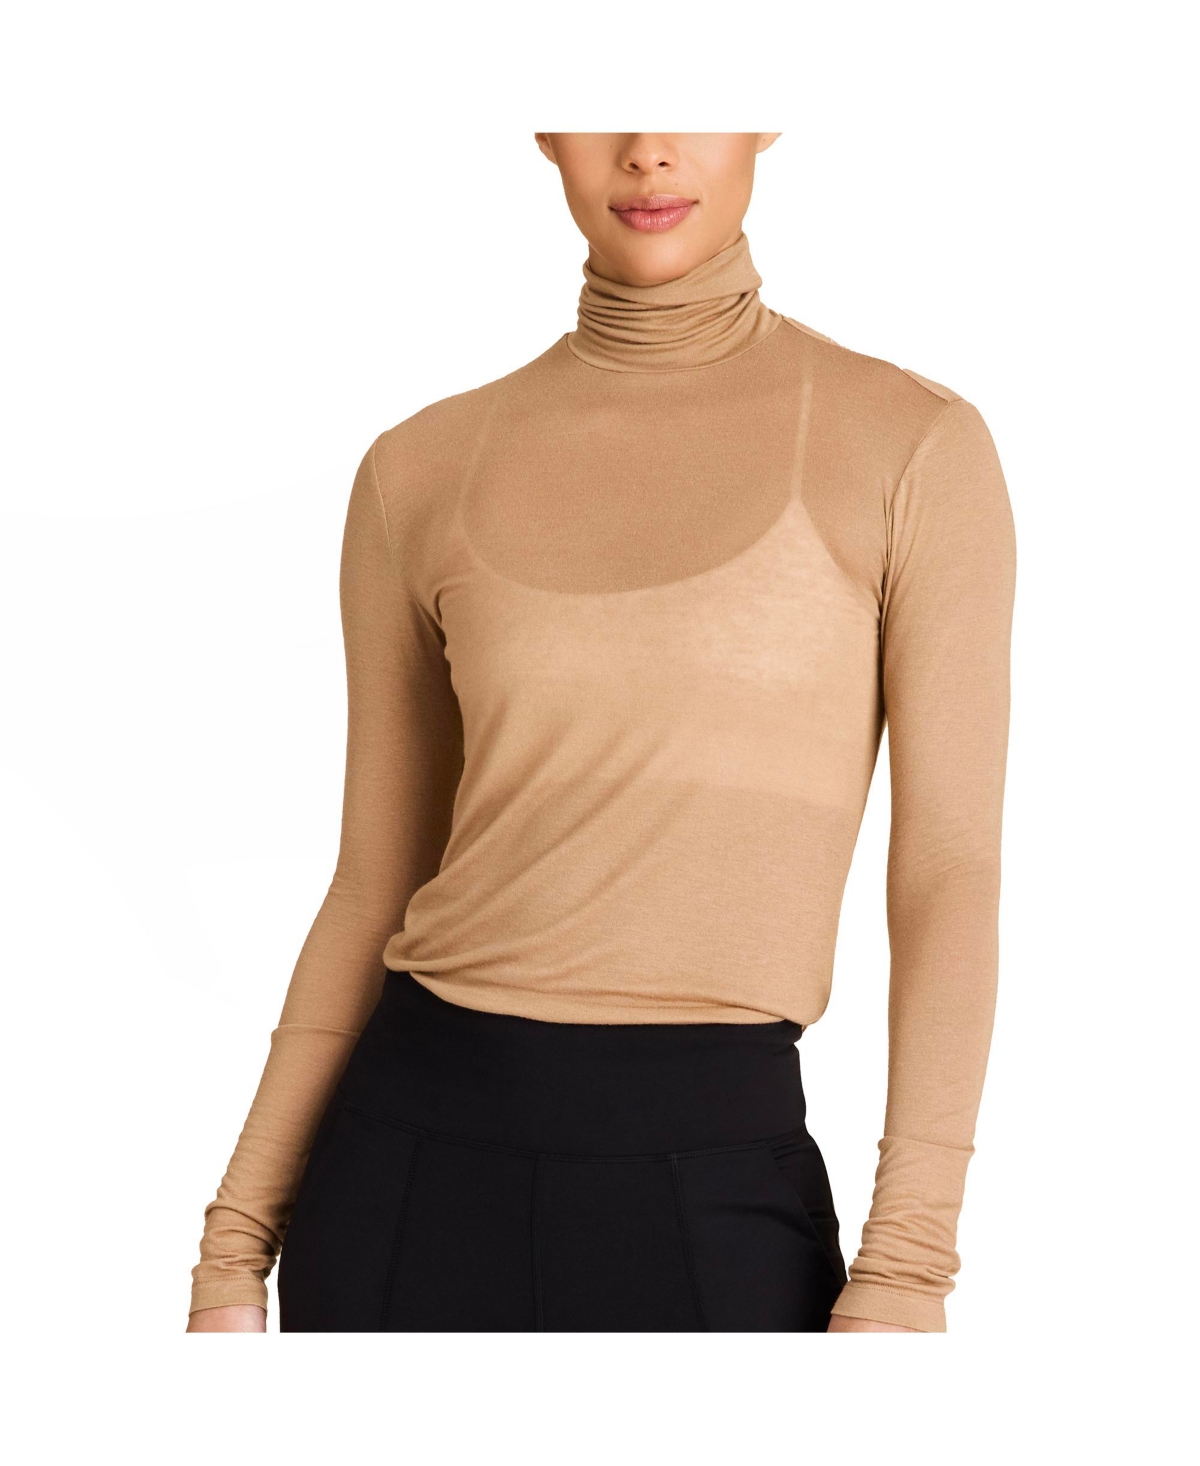 Regular Size Adult Women Washable Cashmere Turtleneck Long Sleeve T-Shirt - Camel